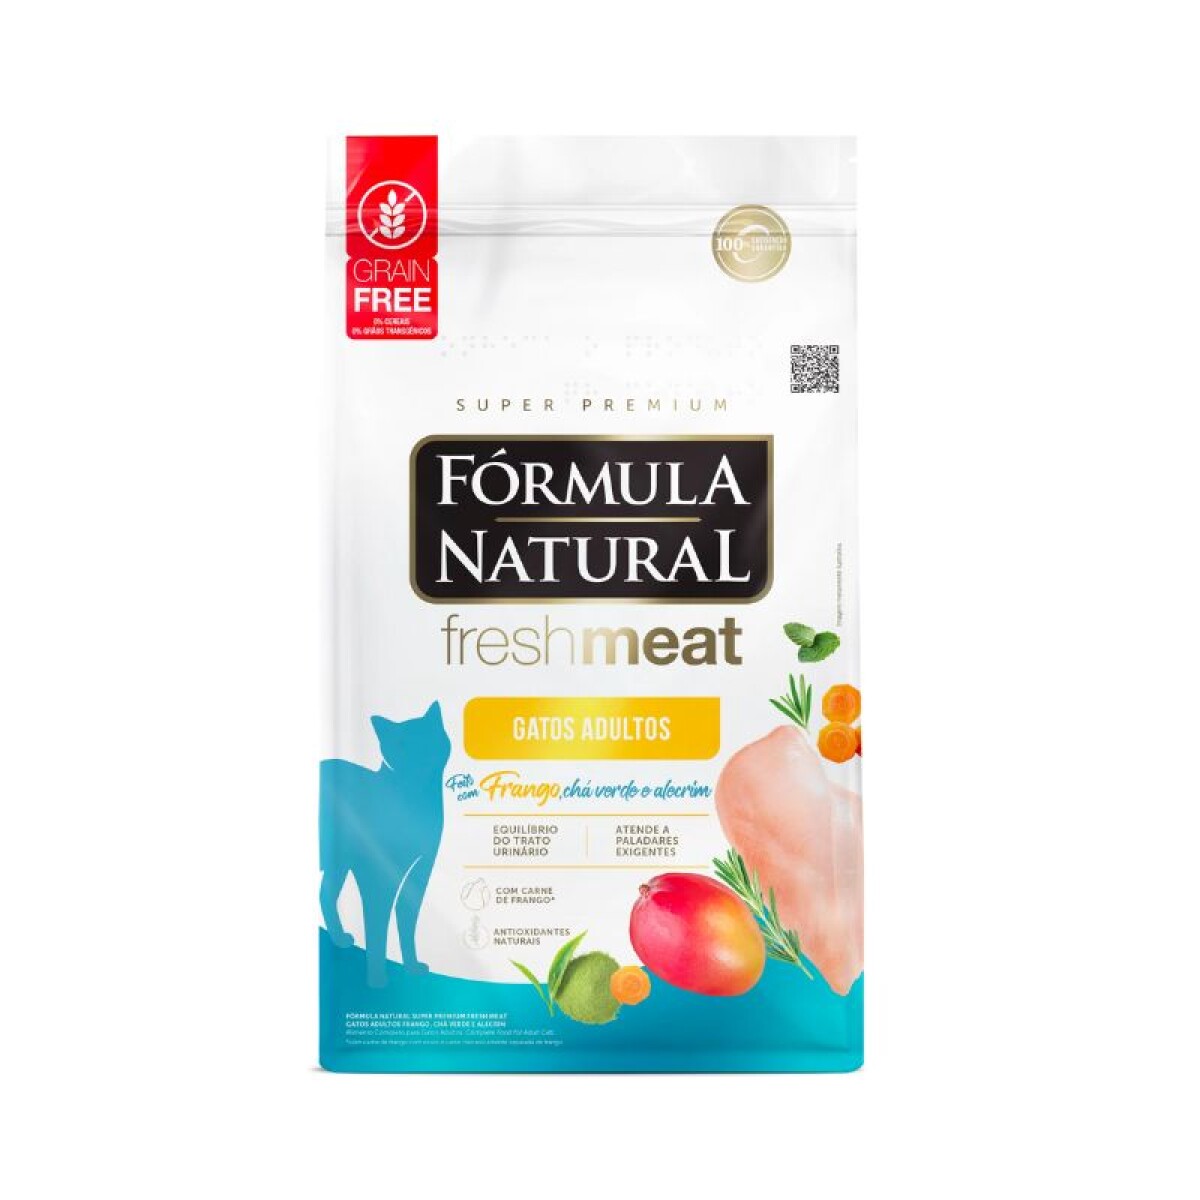 FORMULA NATURAL FRESH MEAT GATOS ADULTO 1KG - Formula Natural Fresh Meat Gatos Adulto 1kg 